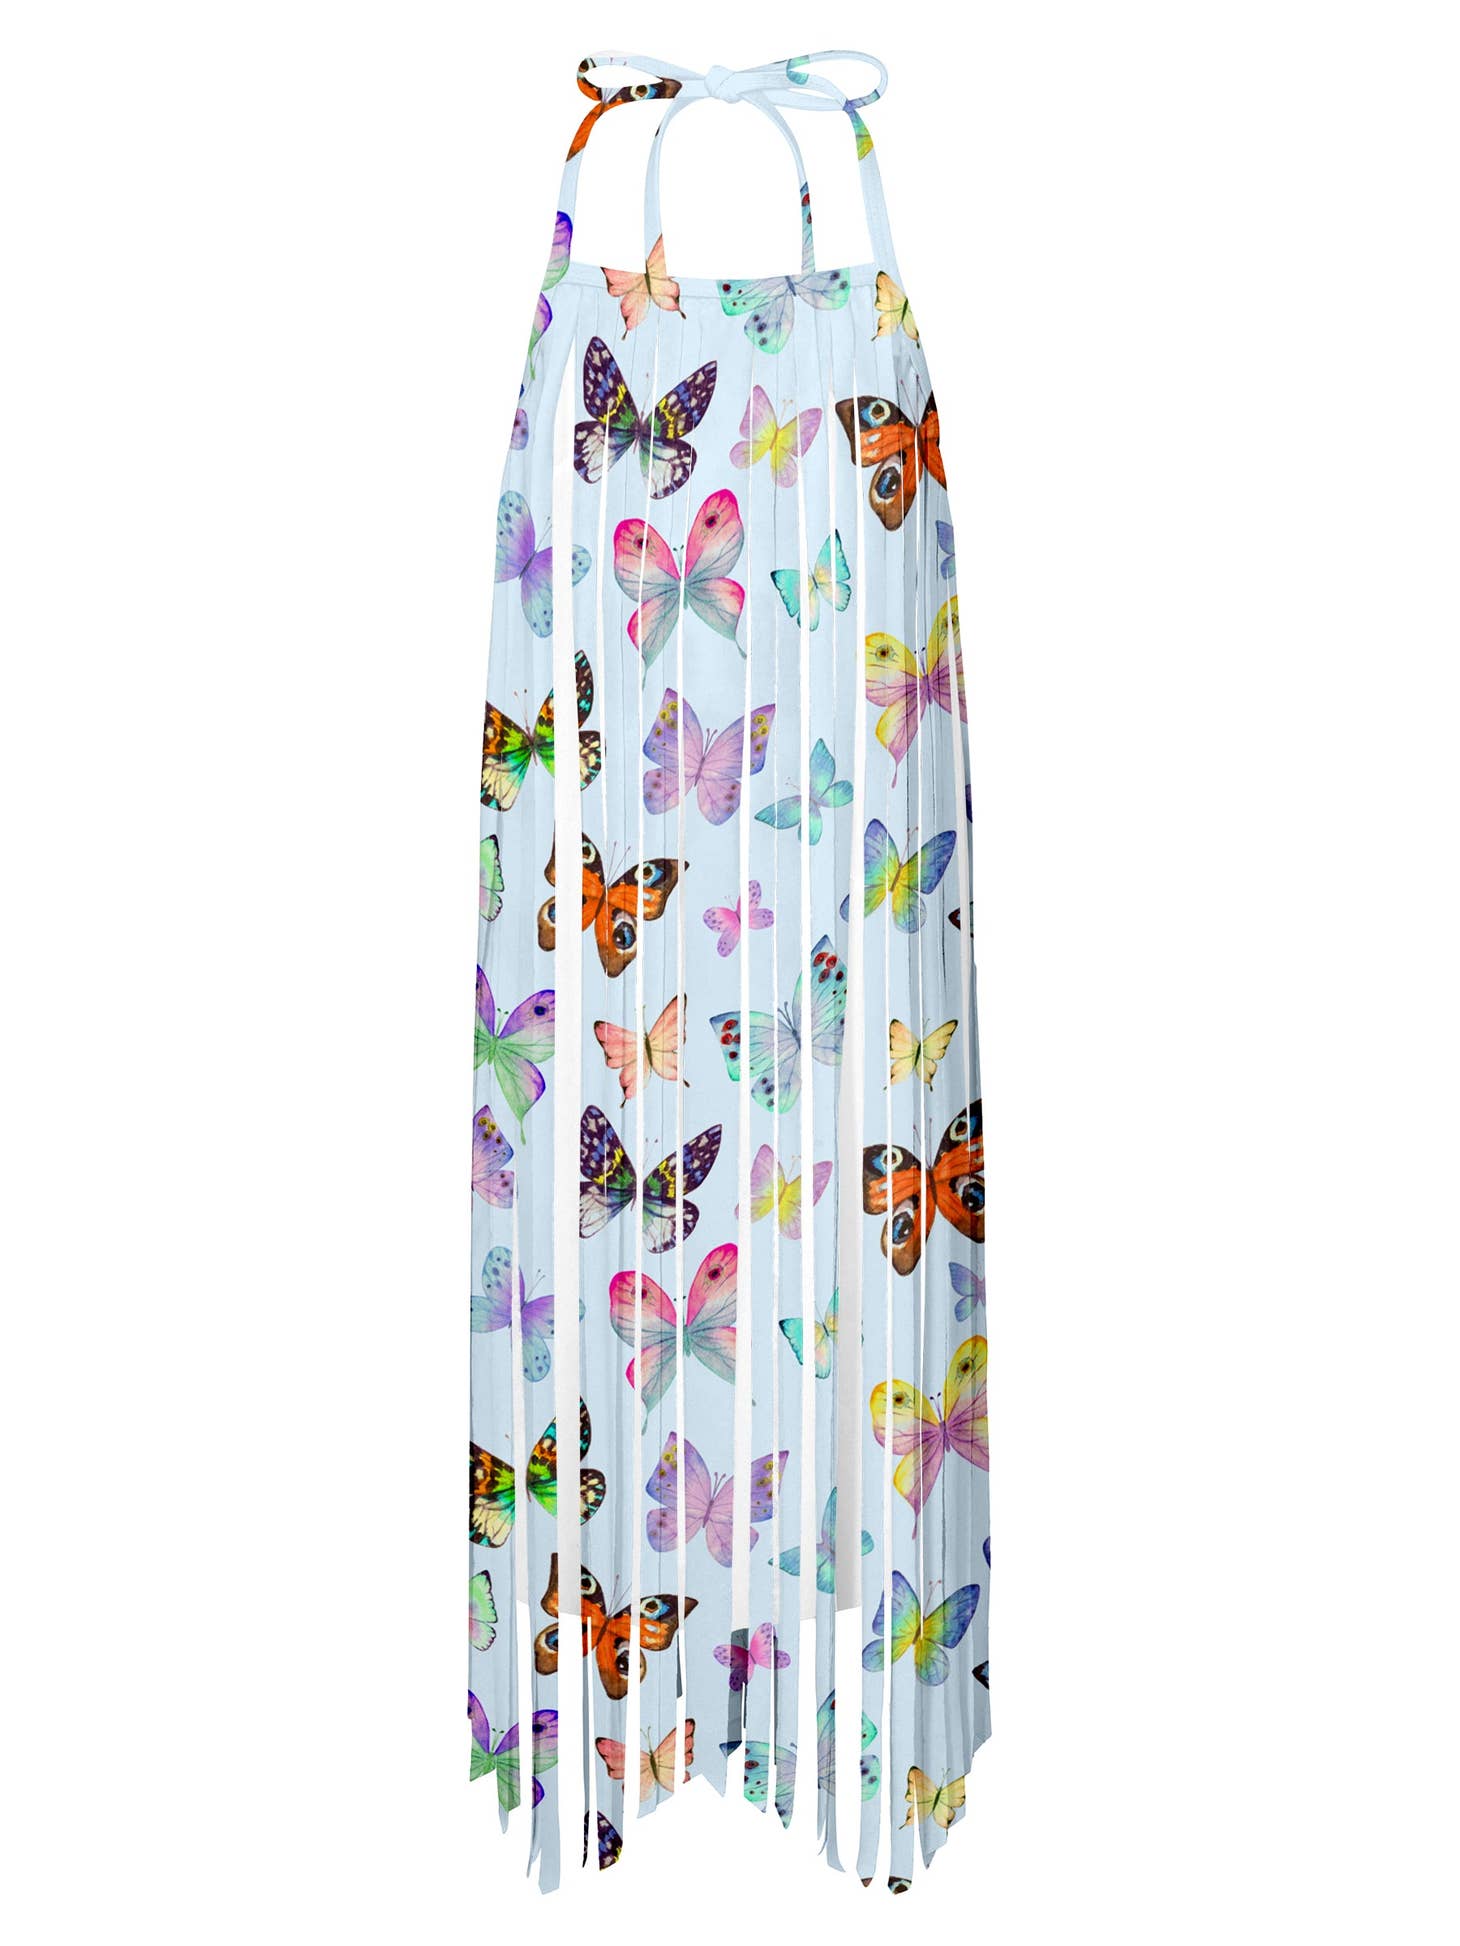 More Butterflies Fringe Beach Dress For Girls